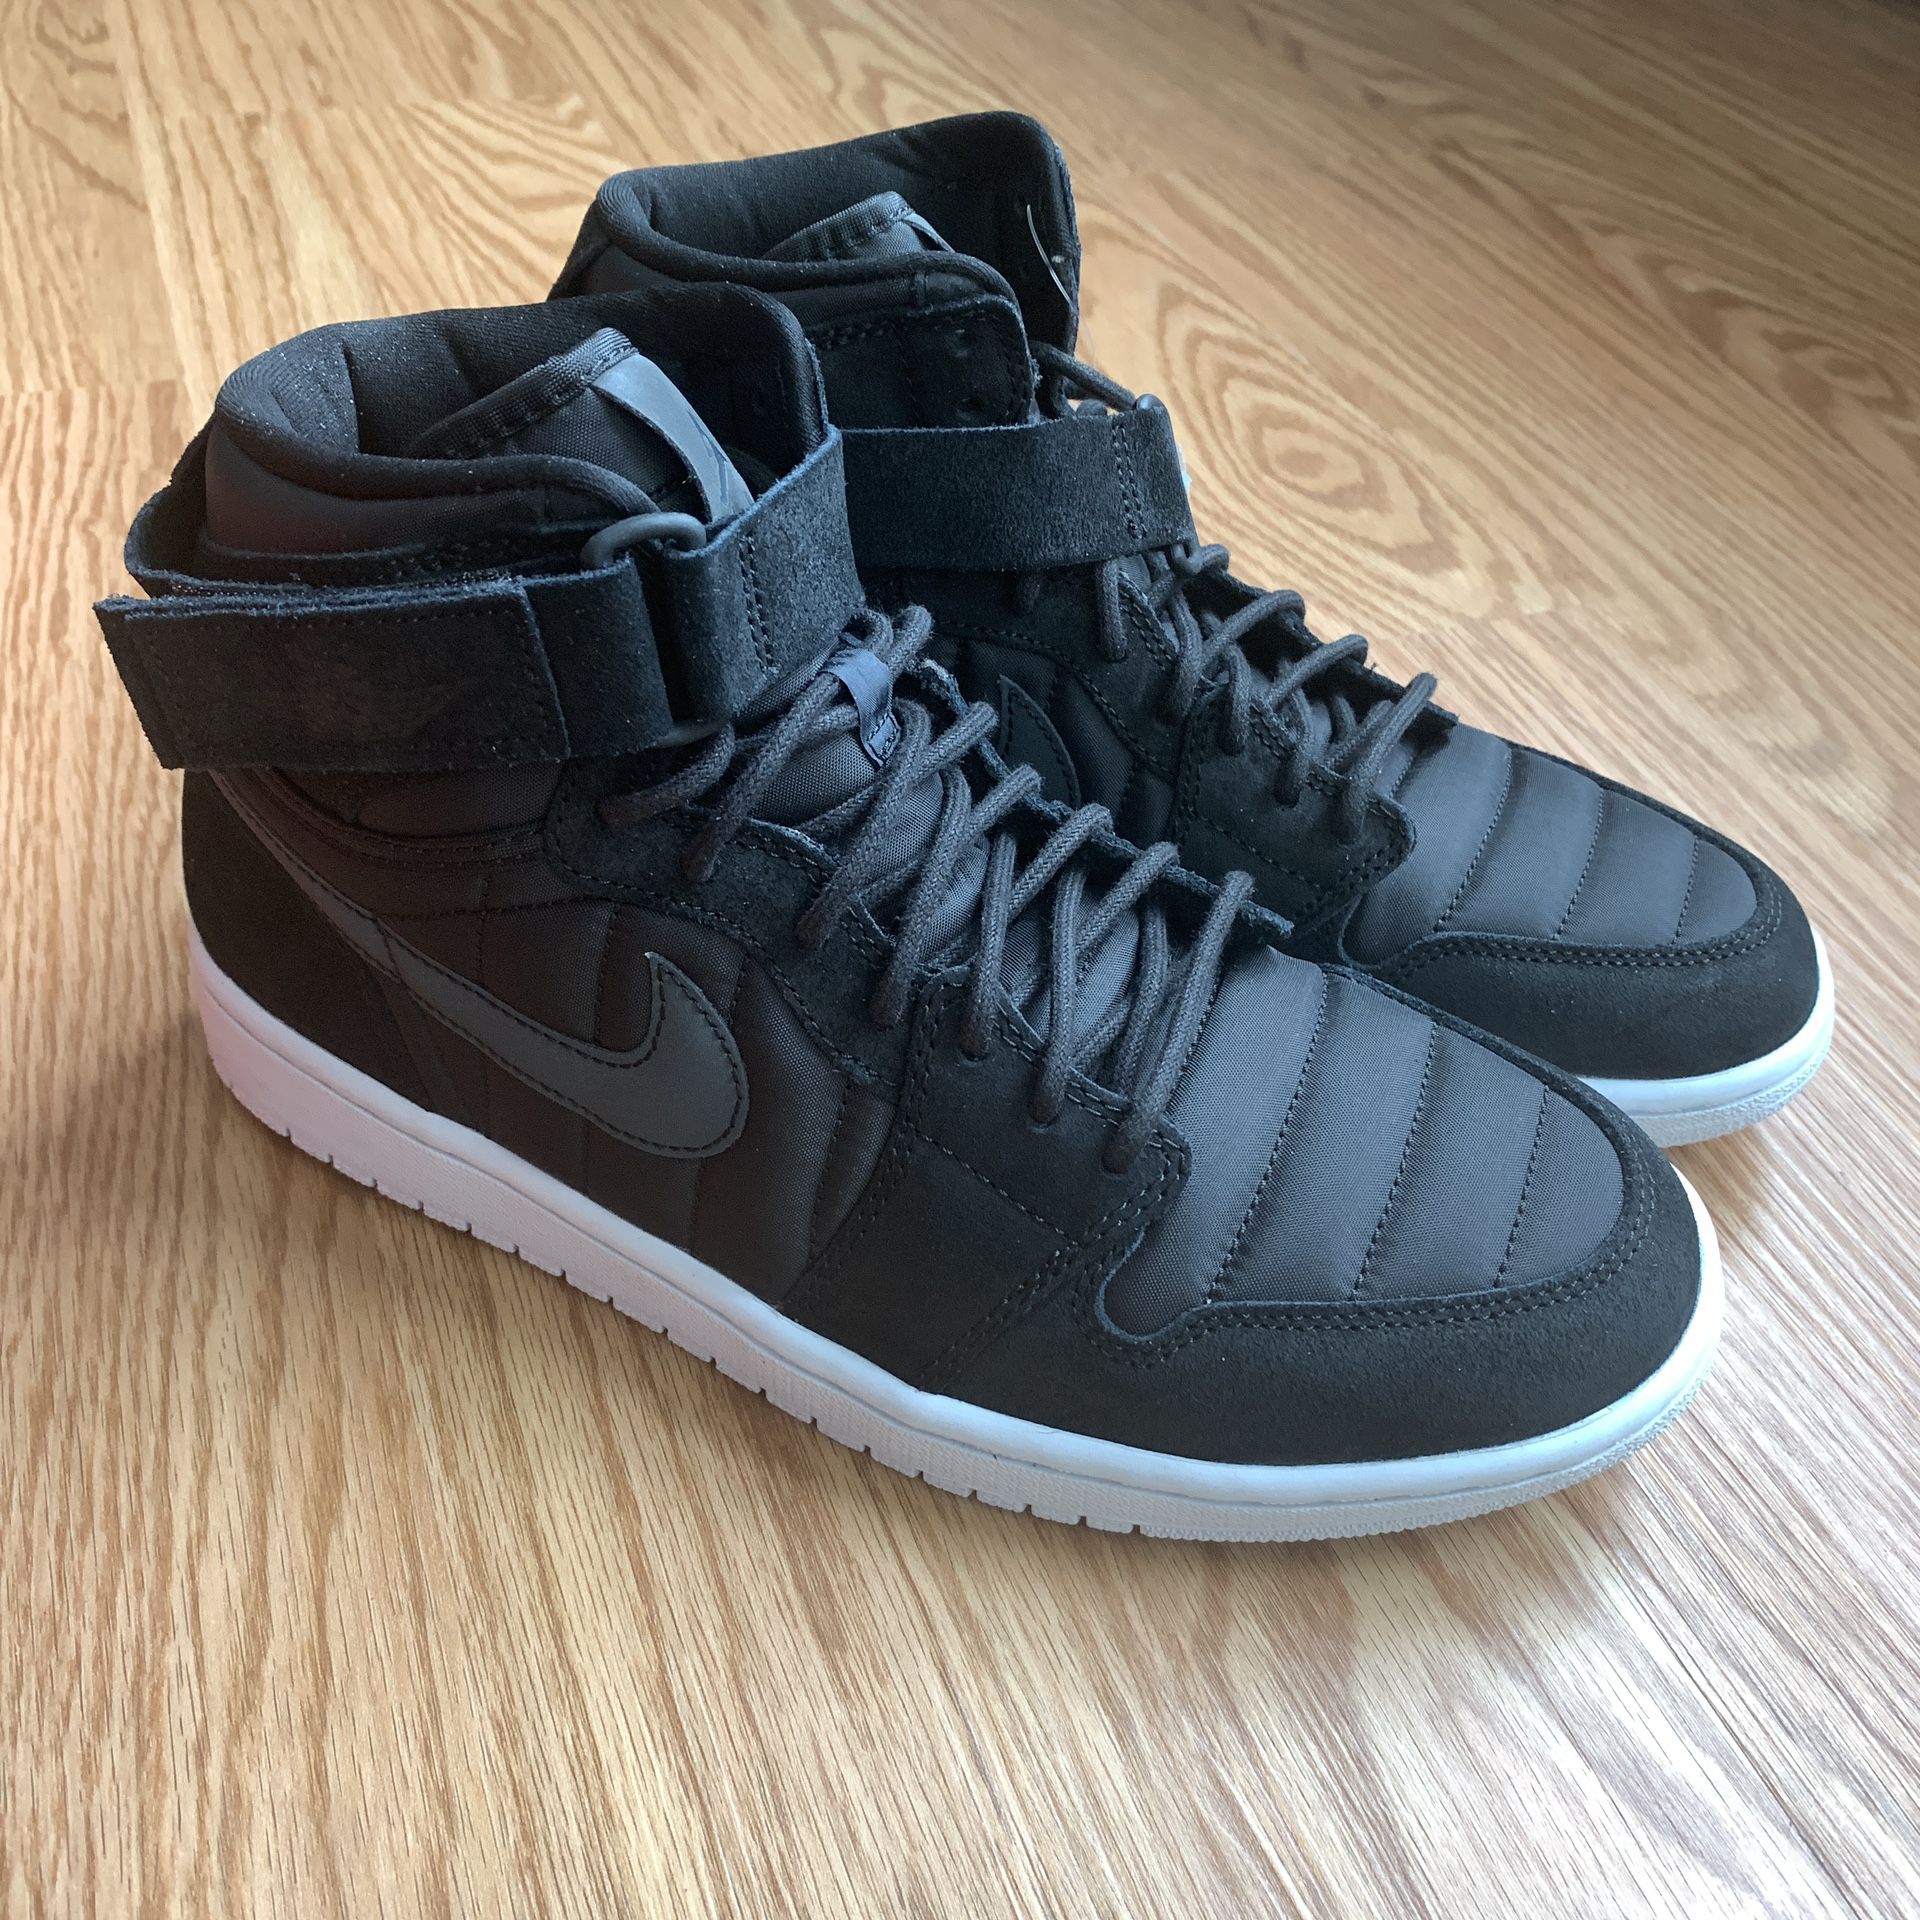 Nike Mens Air Jordan 1 High Strap “Padded Black” size 9